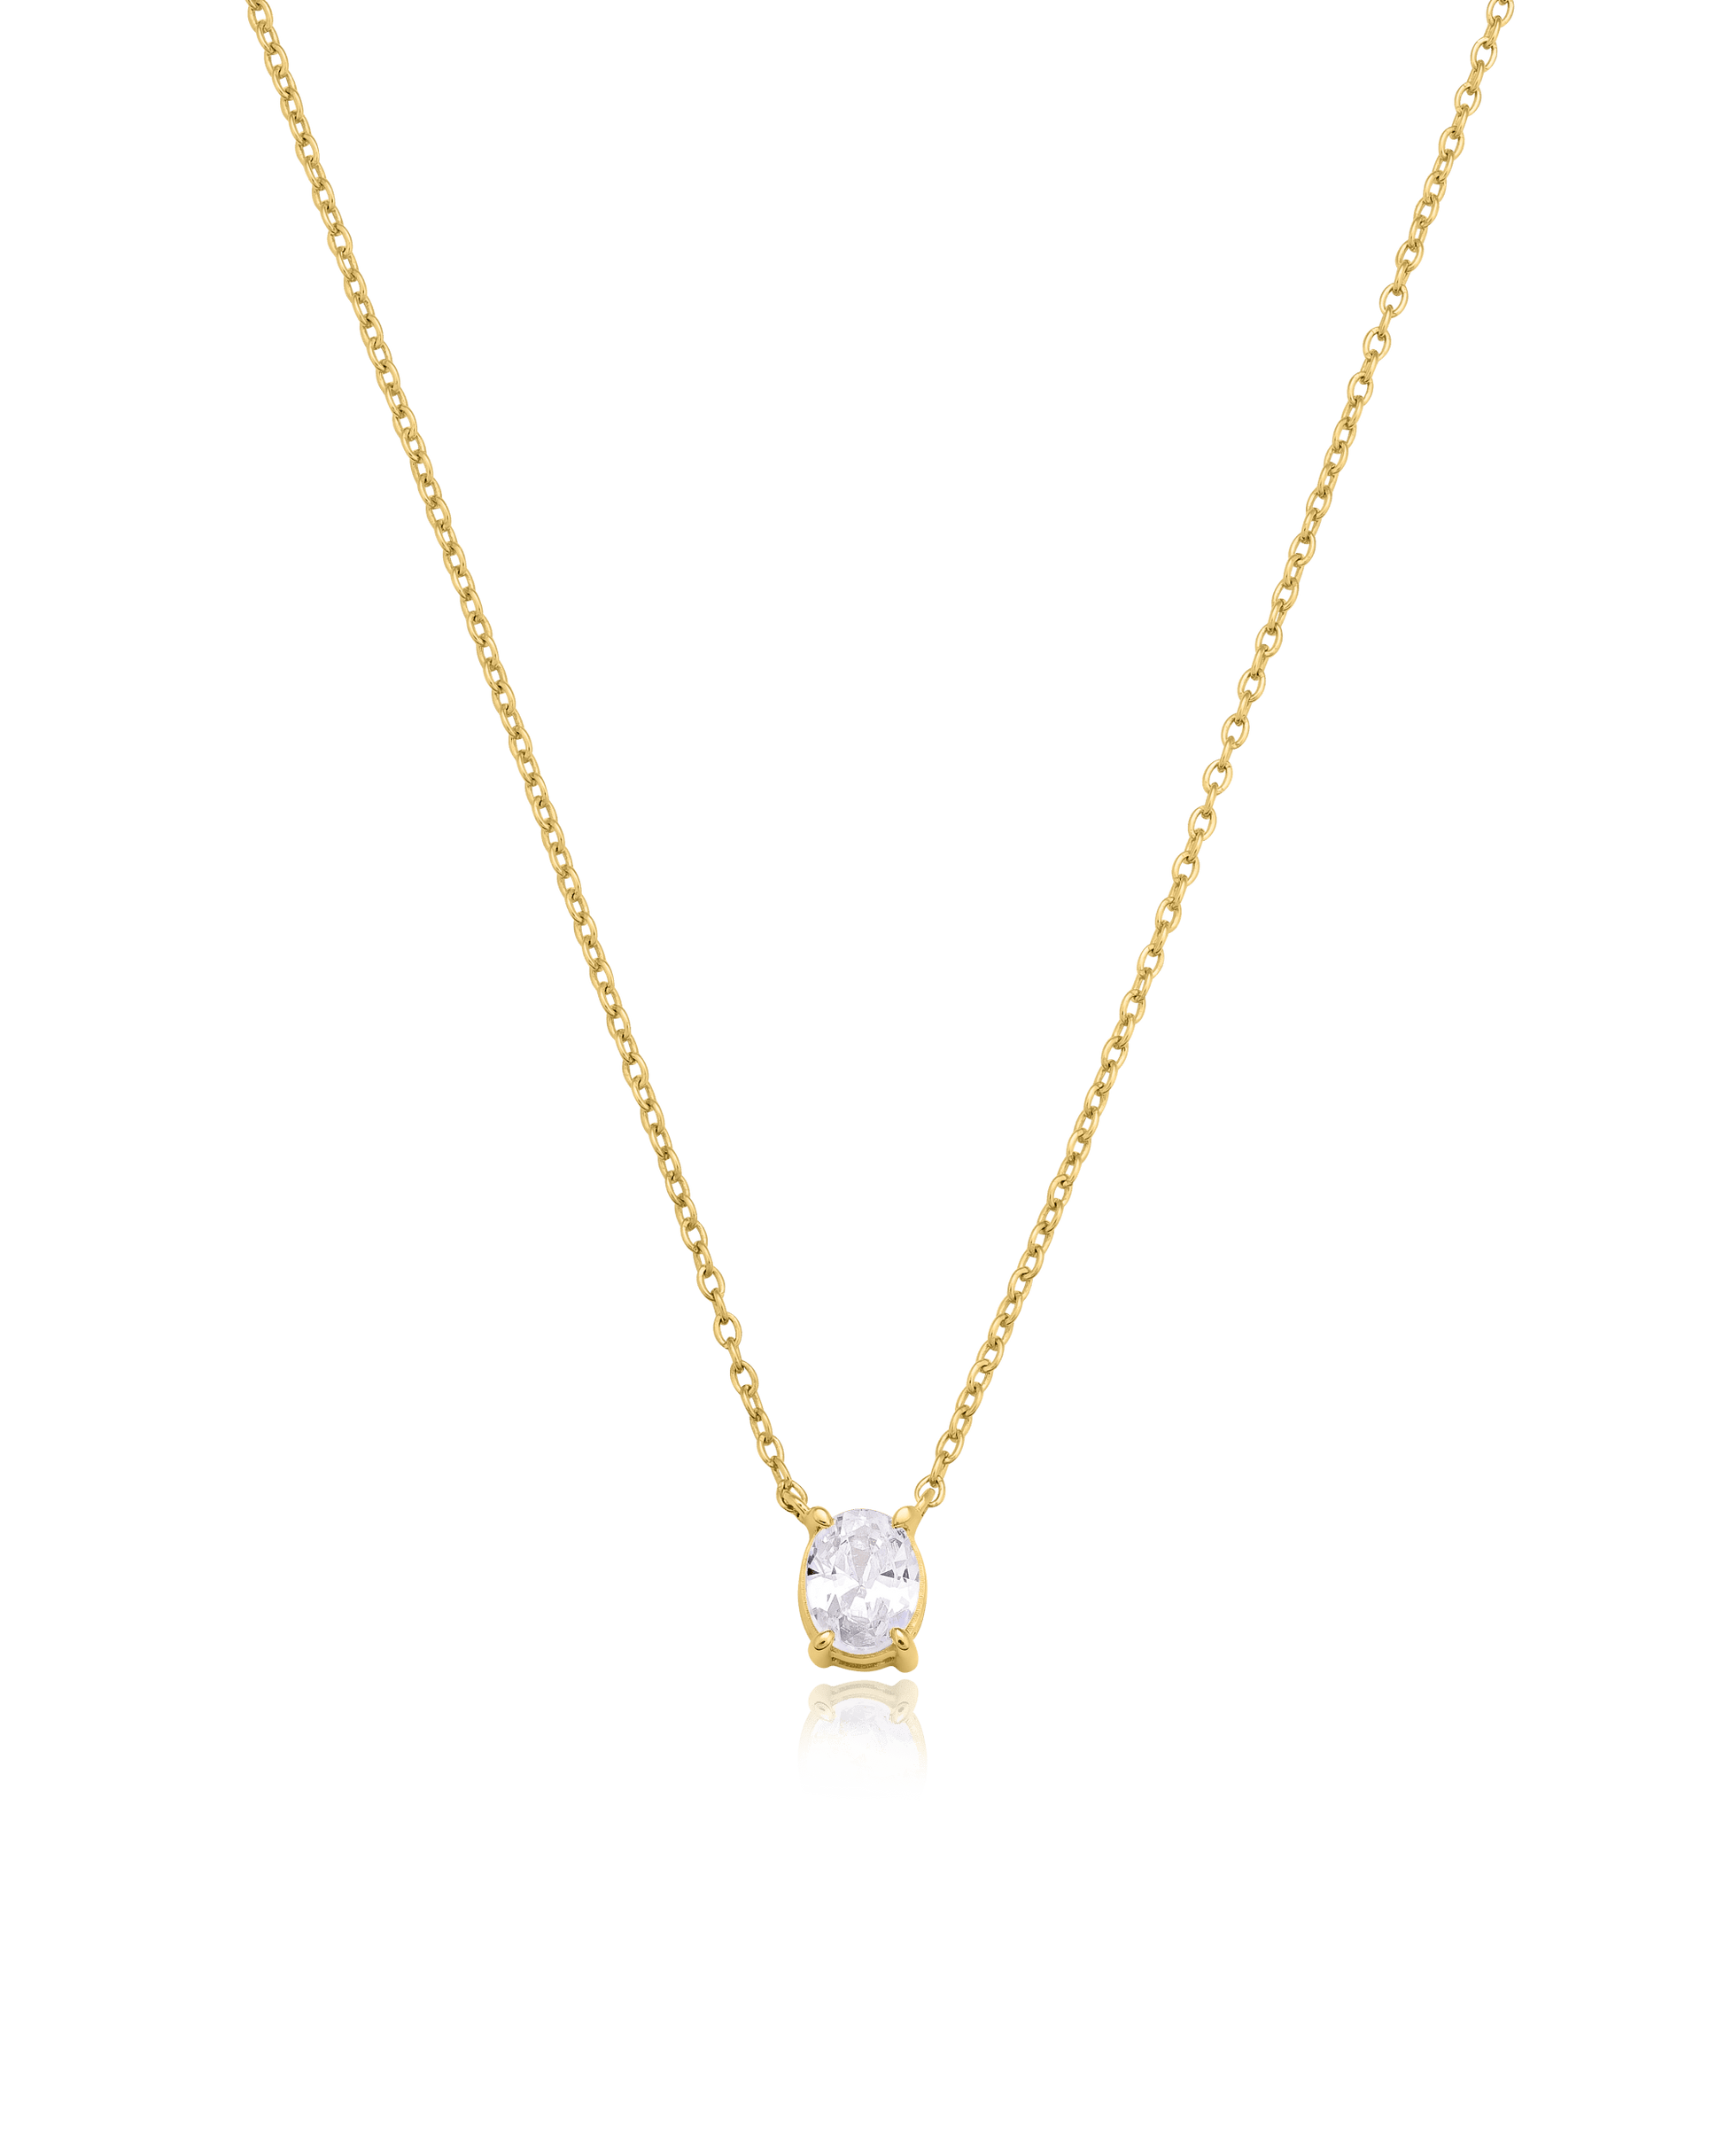 Oval Solitaire Diamond Necklace - 18K Gold Vermeil Necklaces magal-dev 0.10 CT 16” 